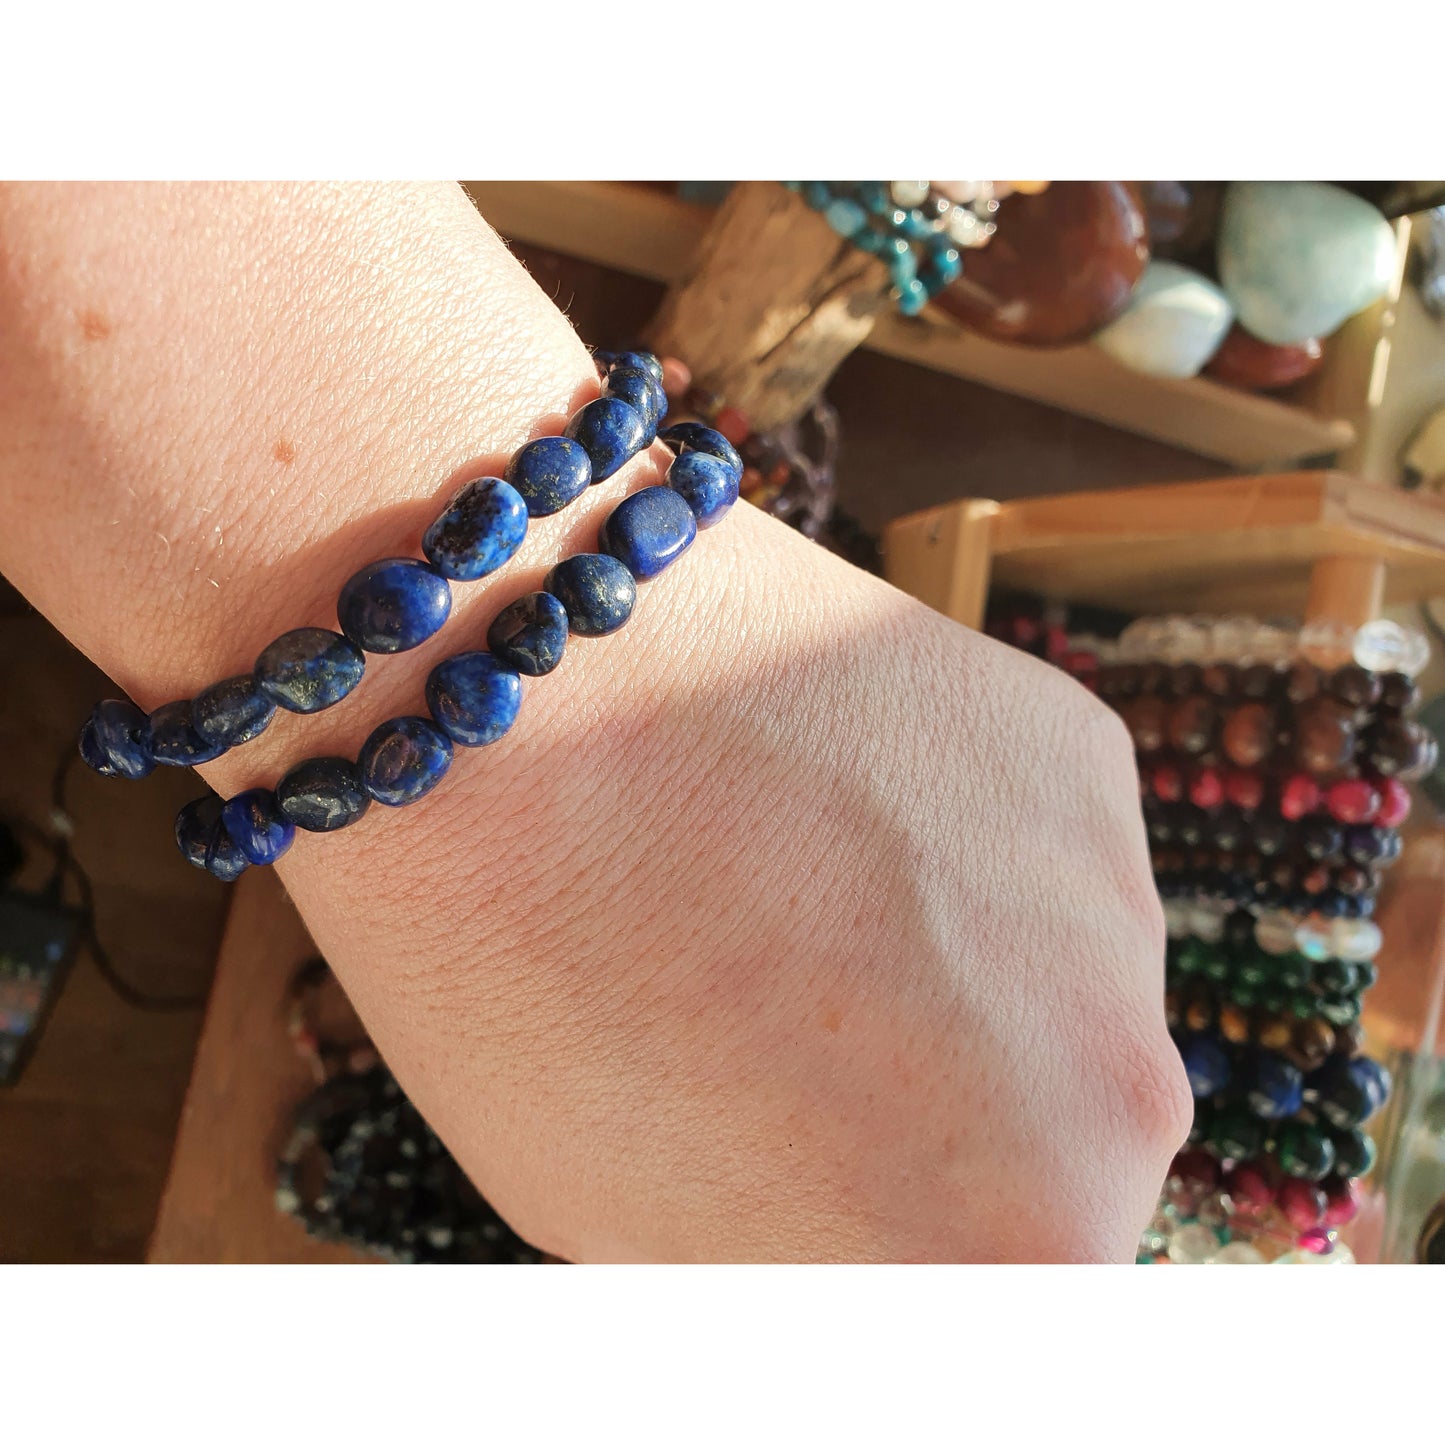 Armband lapis lazuli